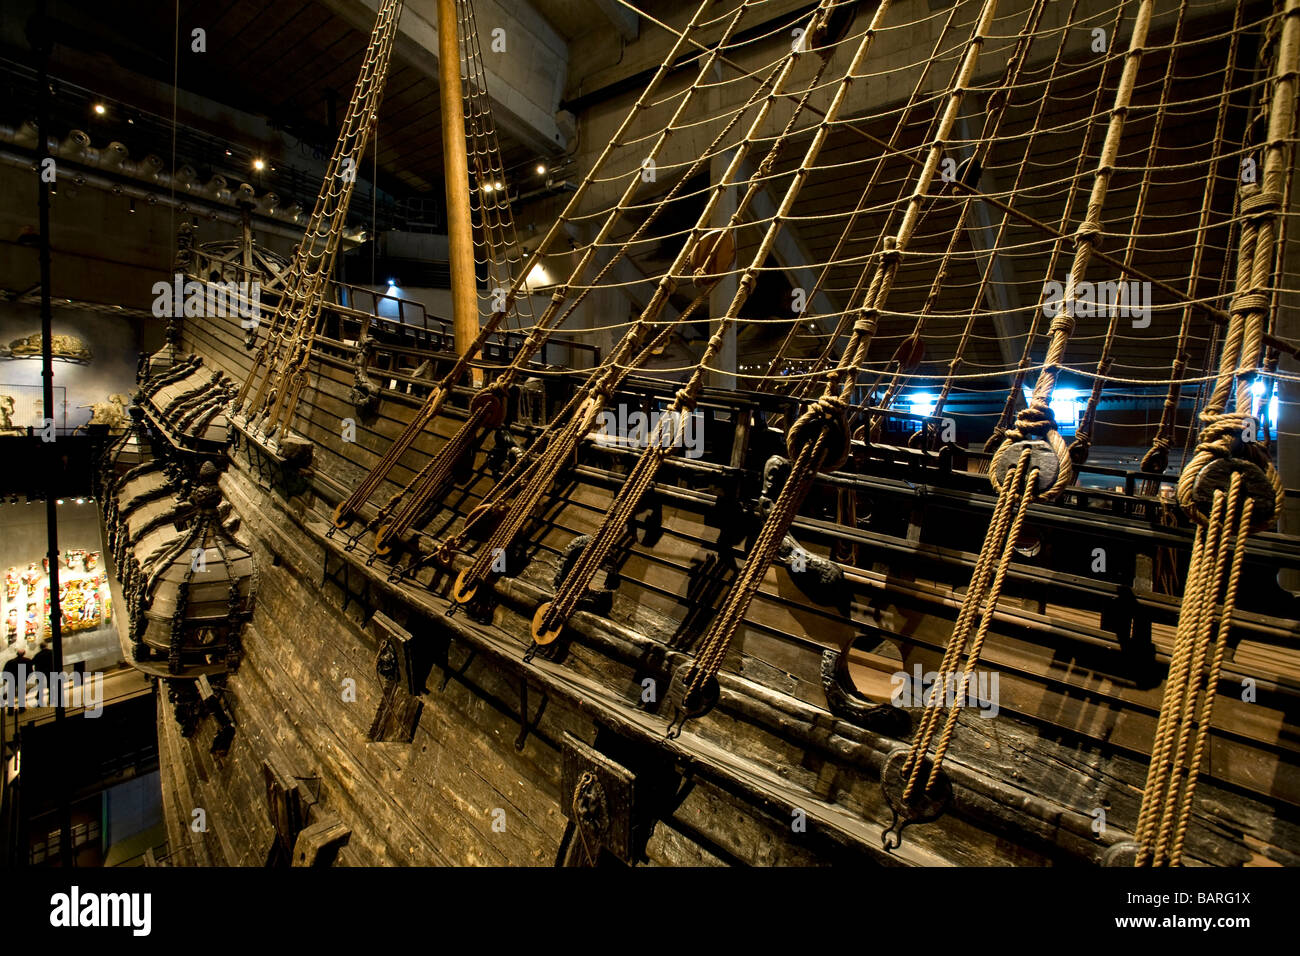 The 17th century Swedish warship, Vasa, in the Vasa Museum, Stockholm, Sweden Stock Photo